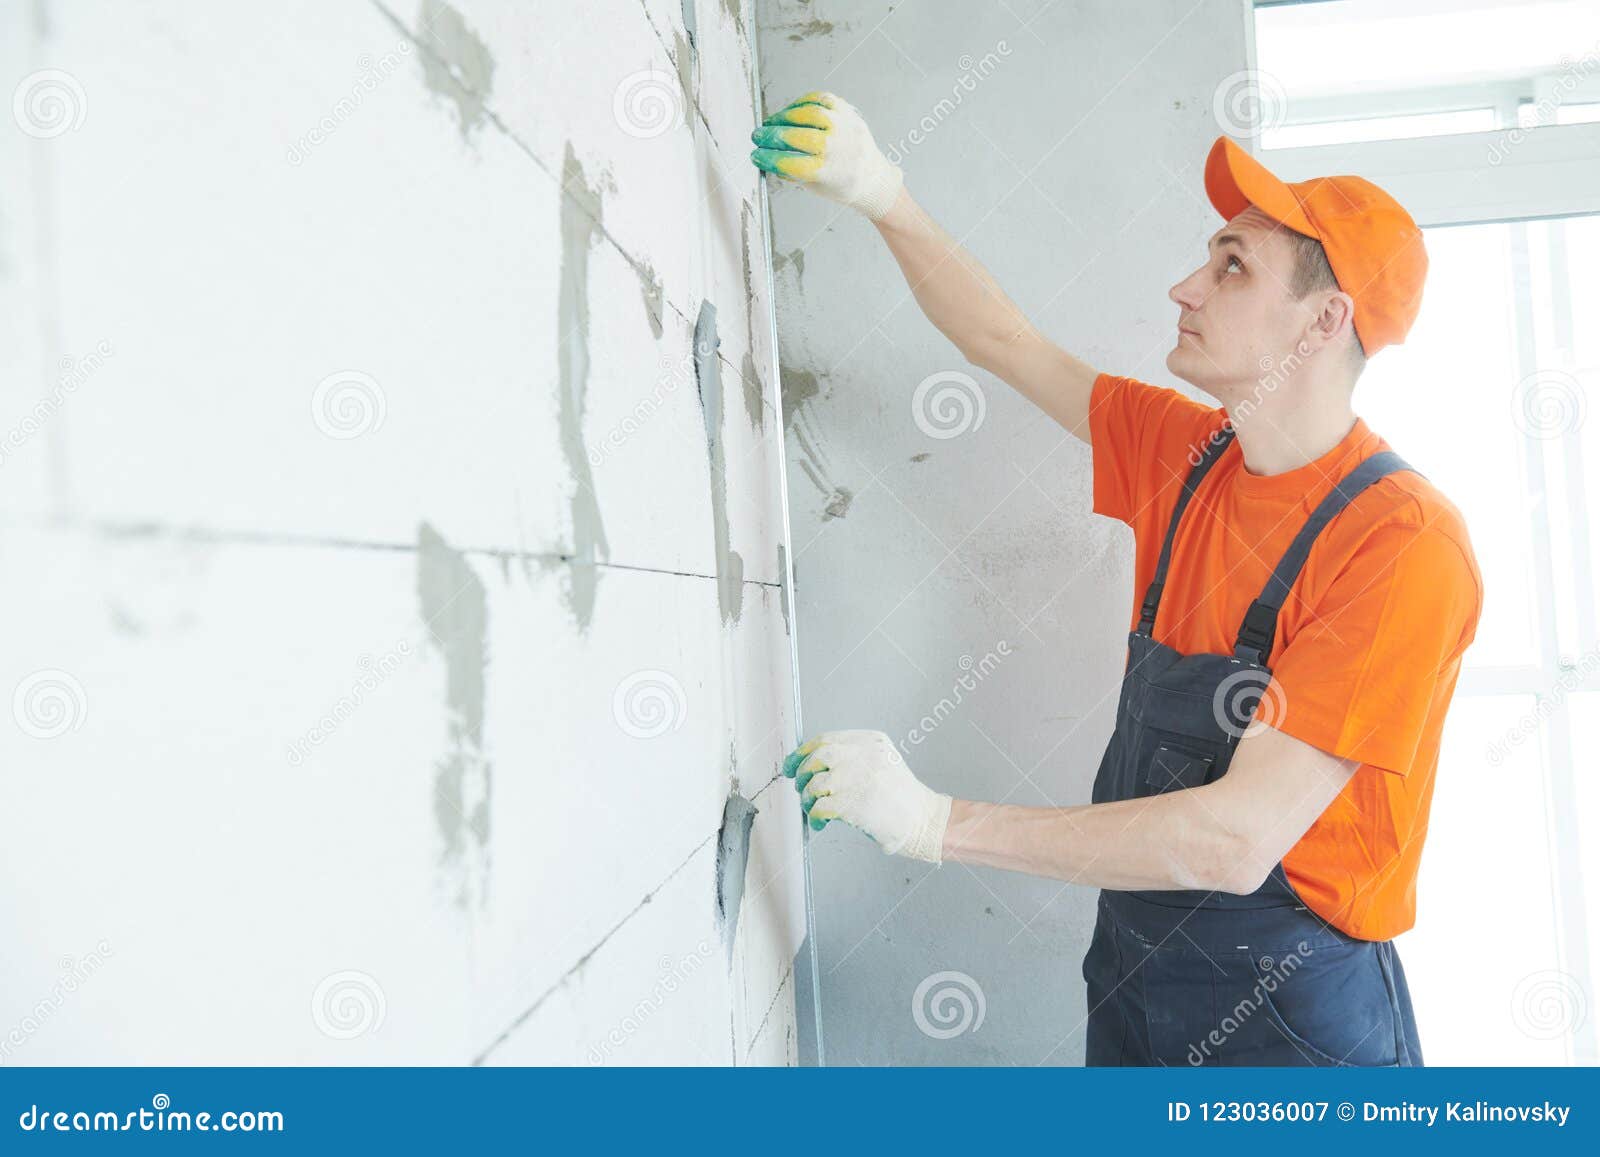 plasterer installing screed on wall for plastering